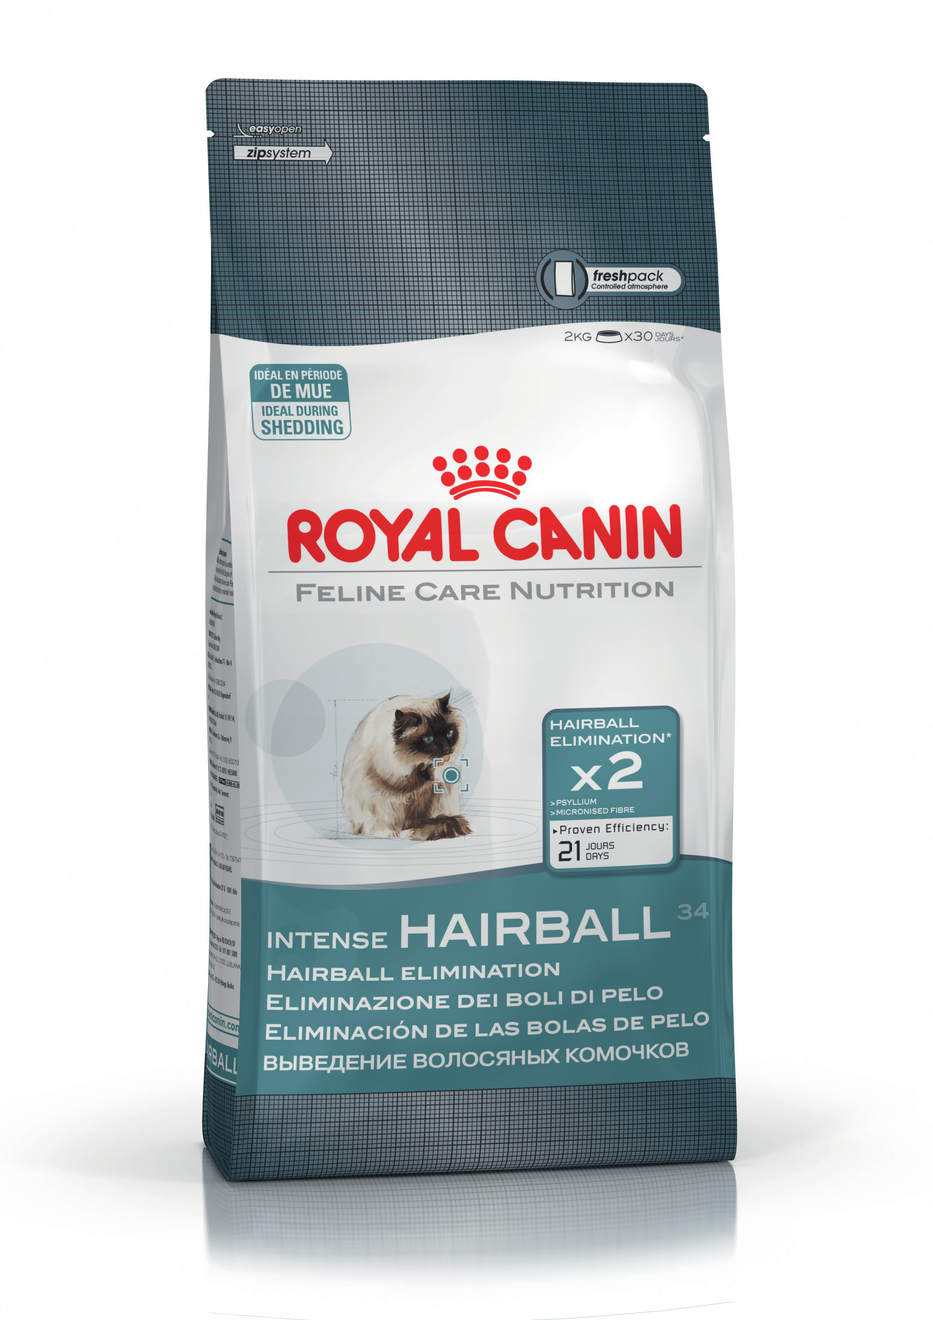 royal canin intense